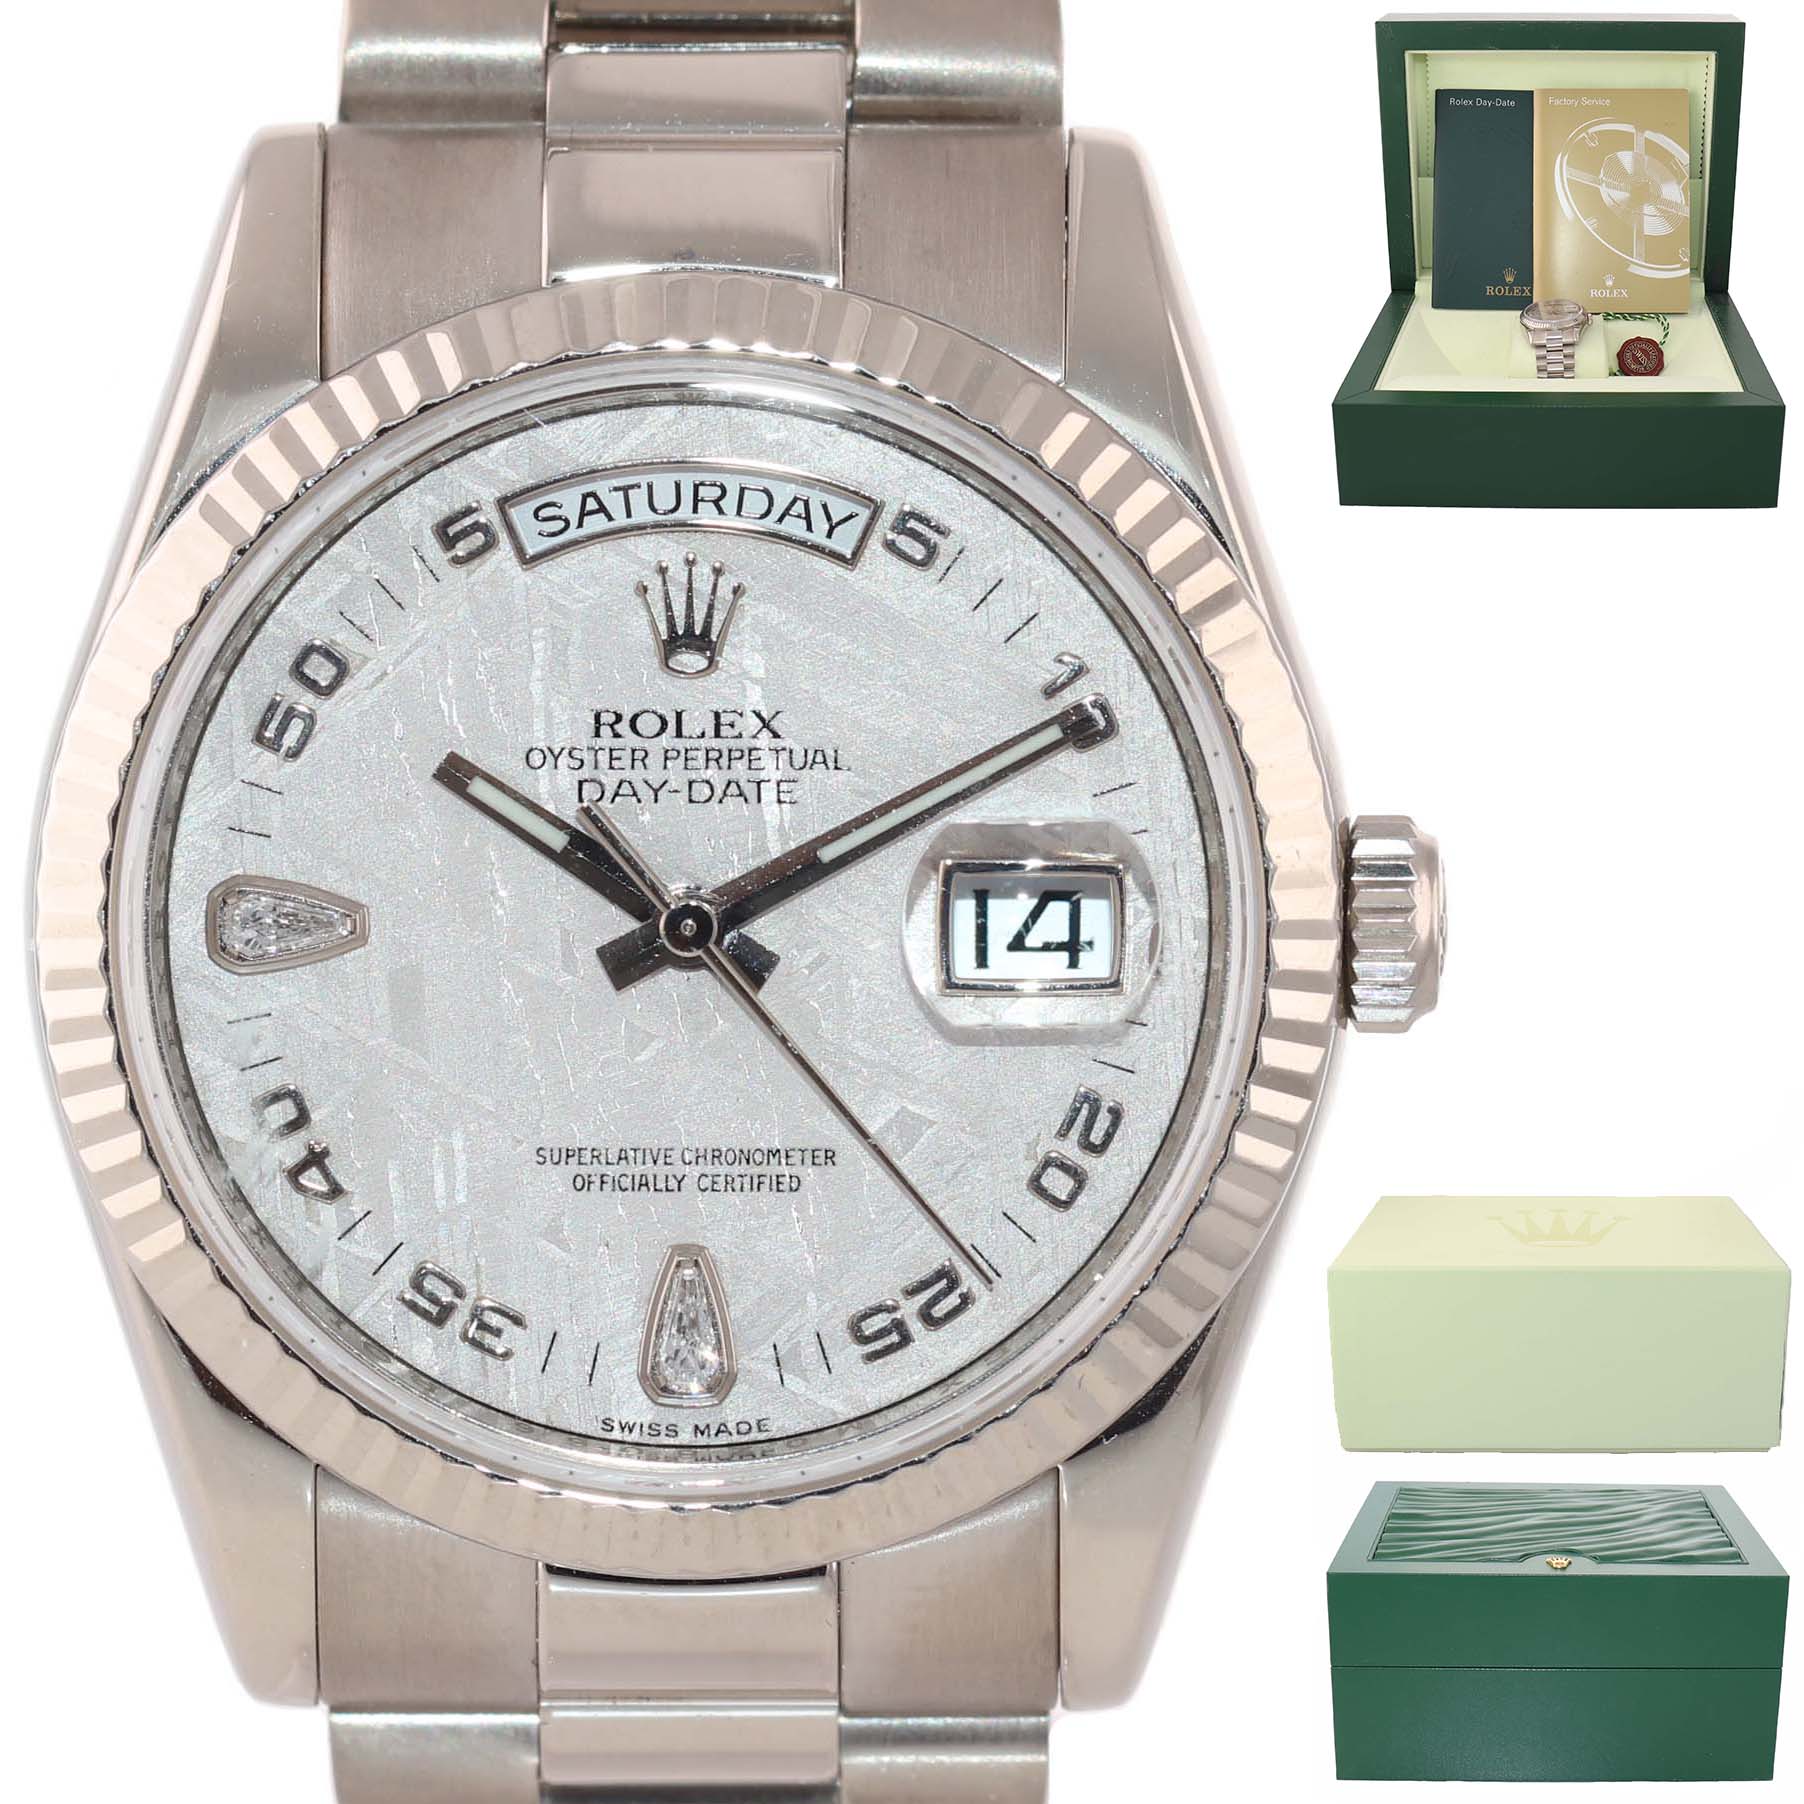 2008 METEORITE DIAMOND Rolex President Day Date 118239 White Gold Watch